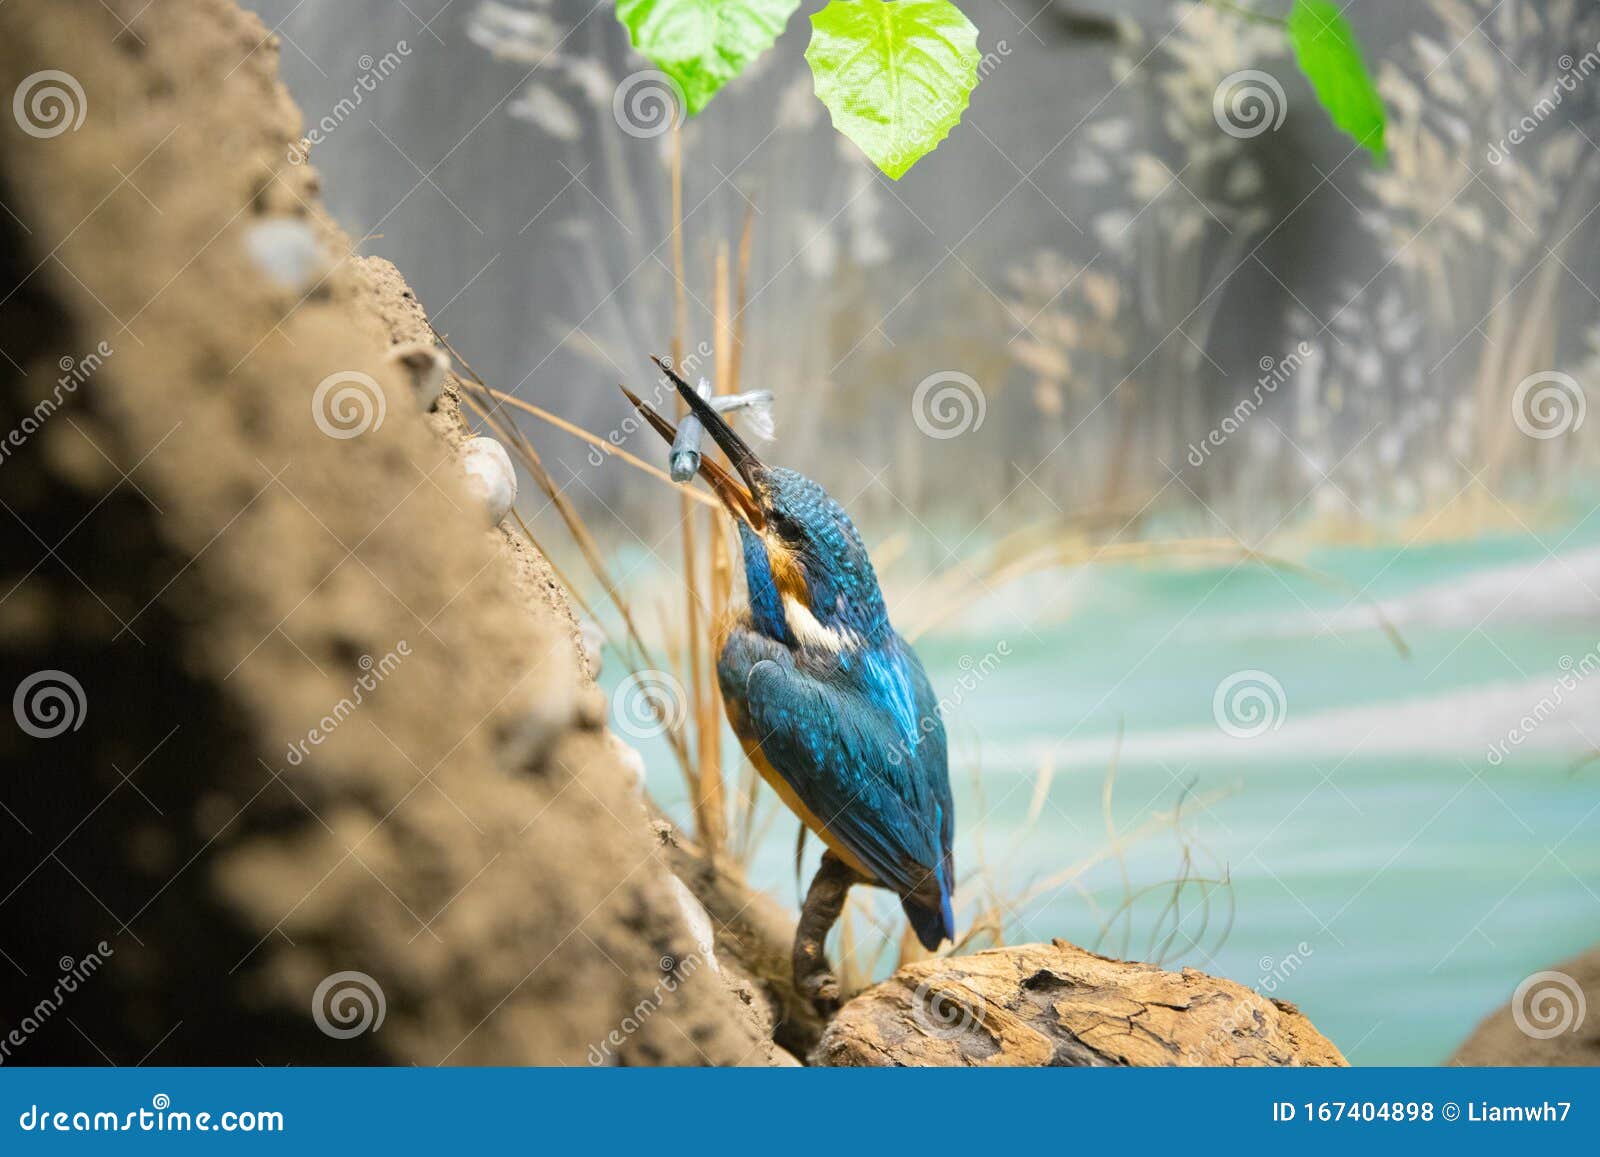 stuffed kingfisher